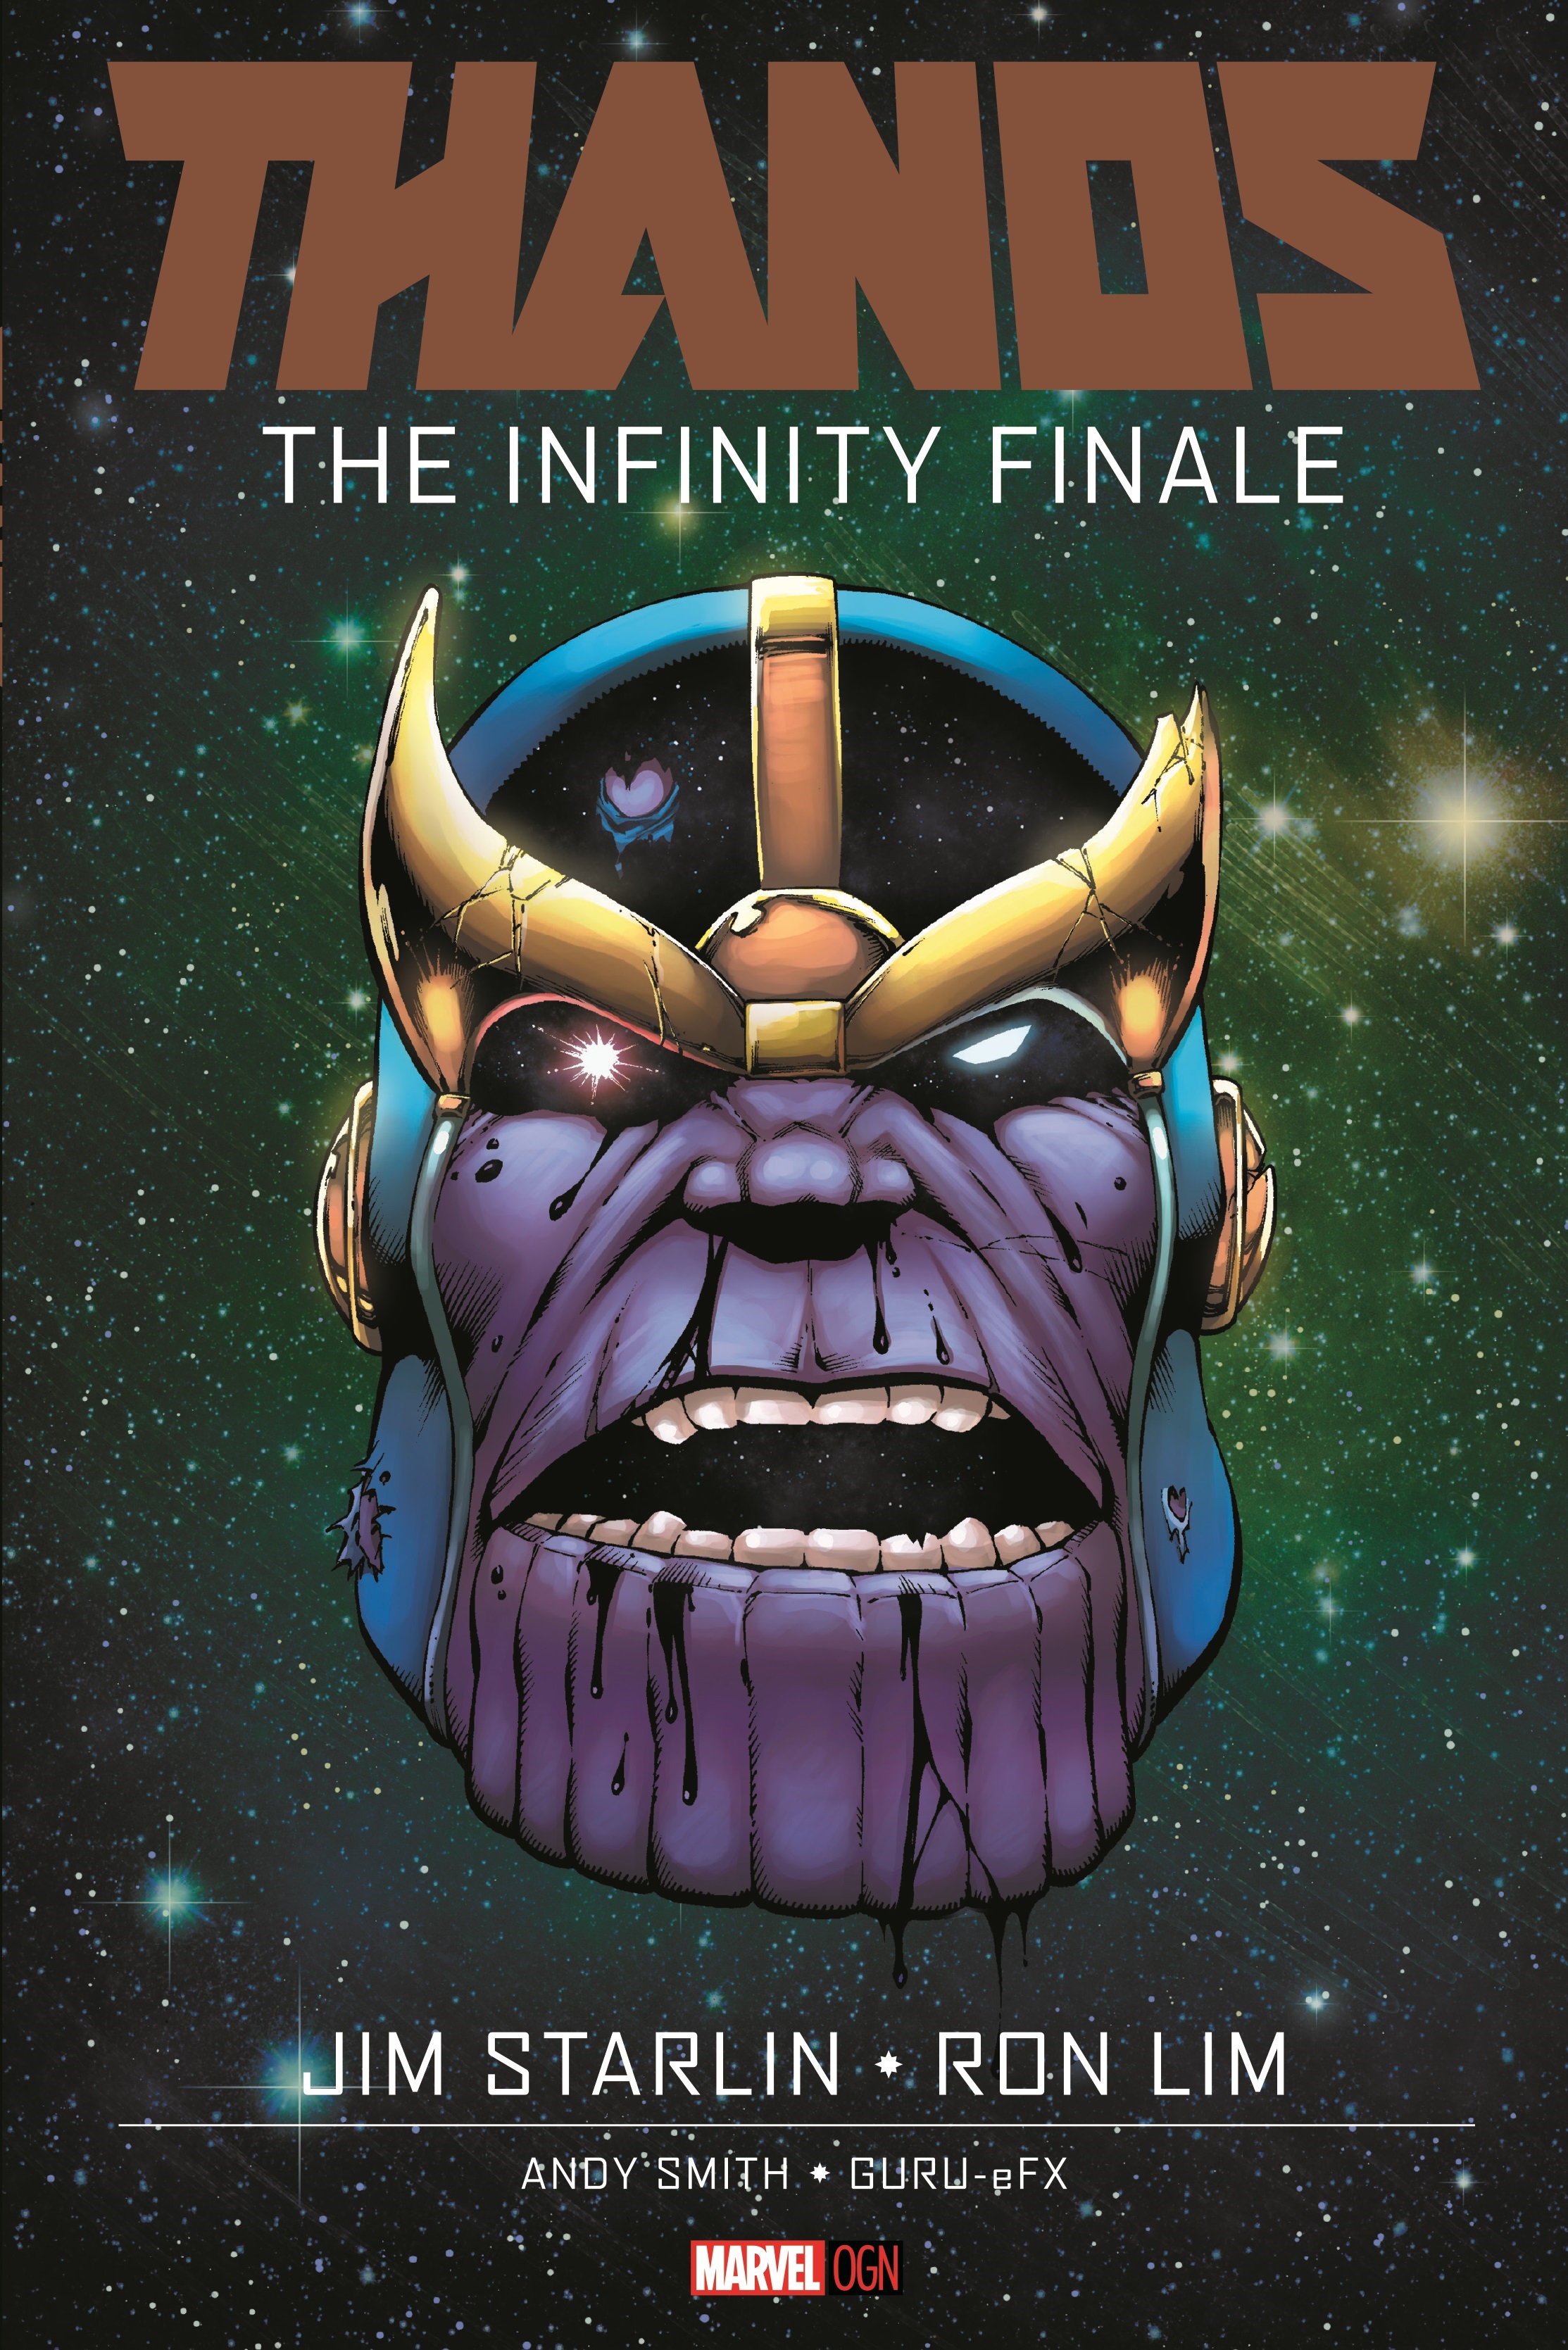 Infinity finale